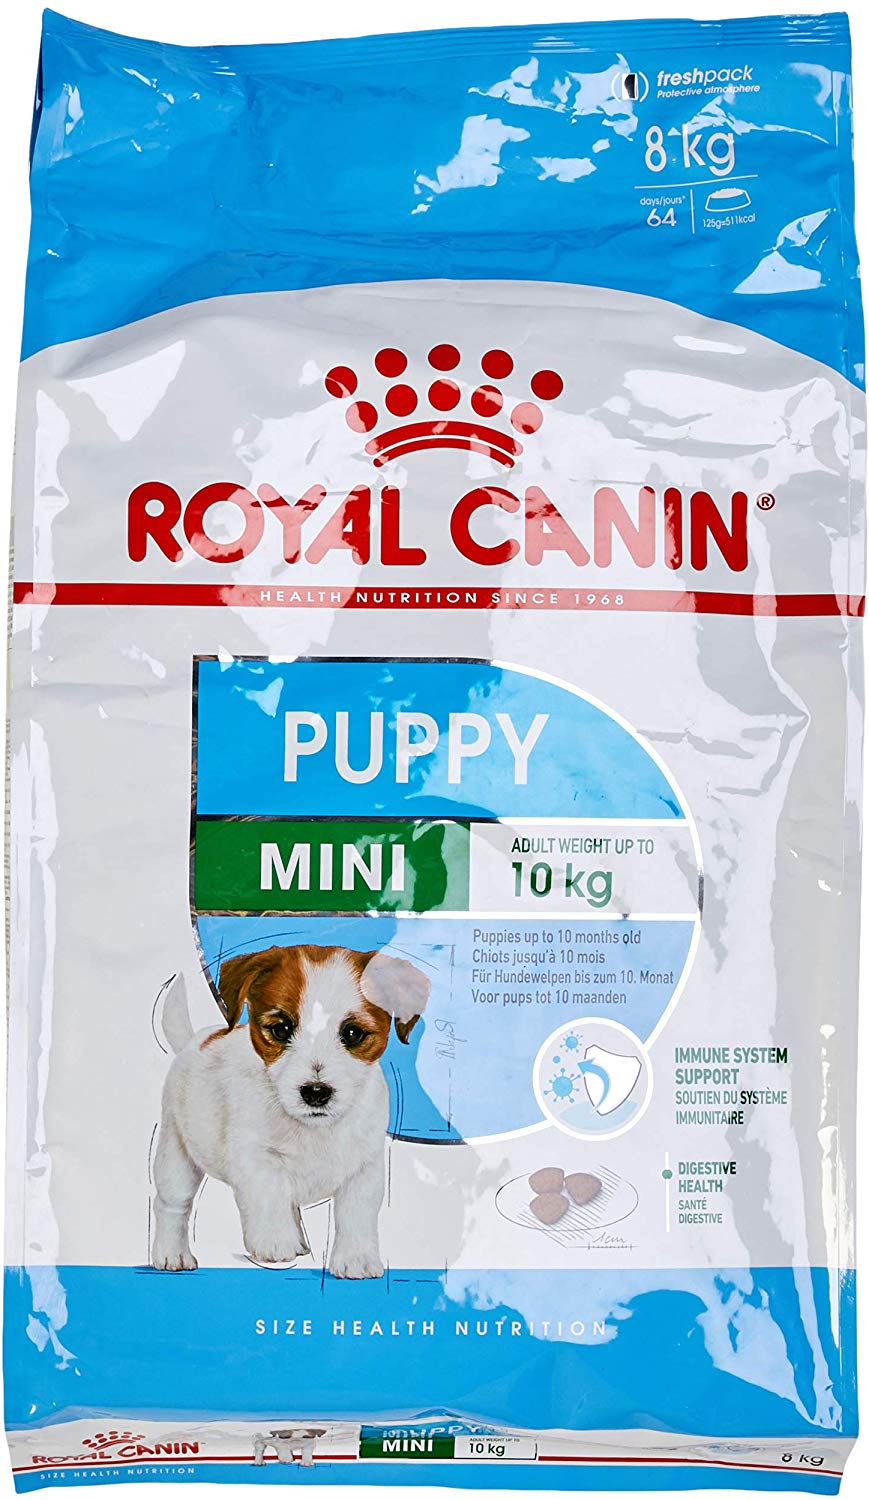 Royal Canin Puppy 